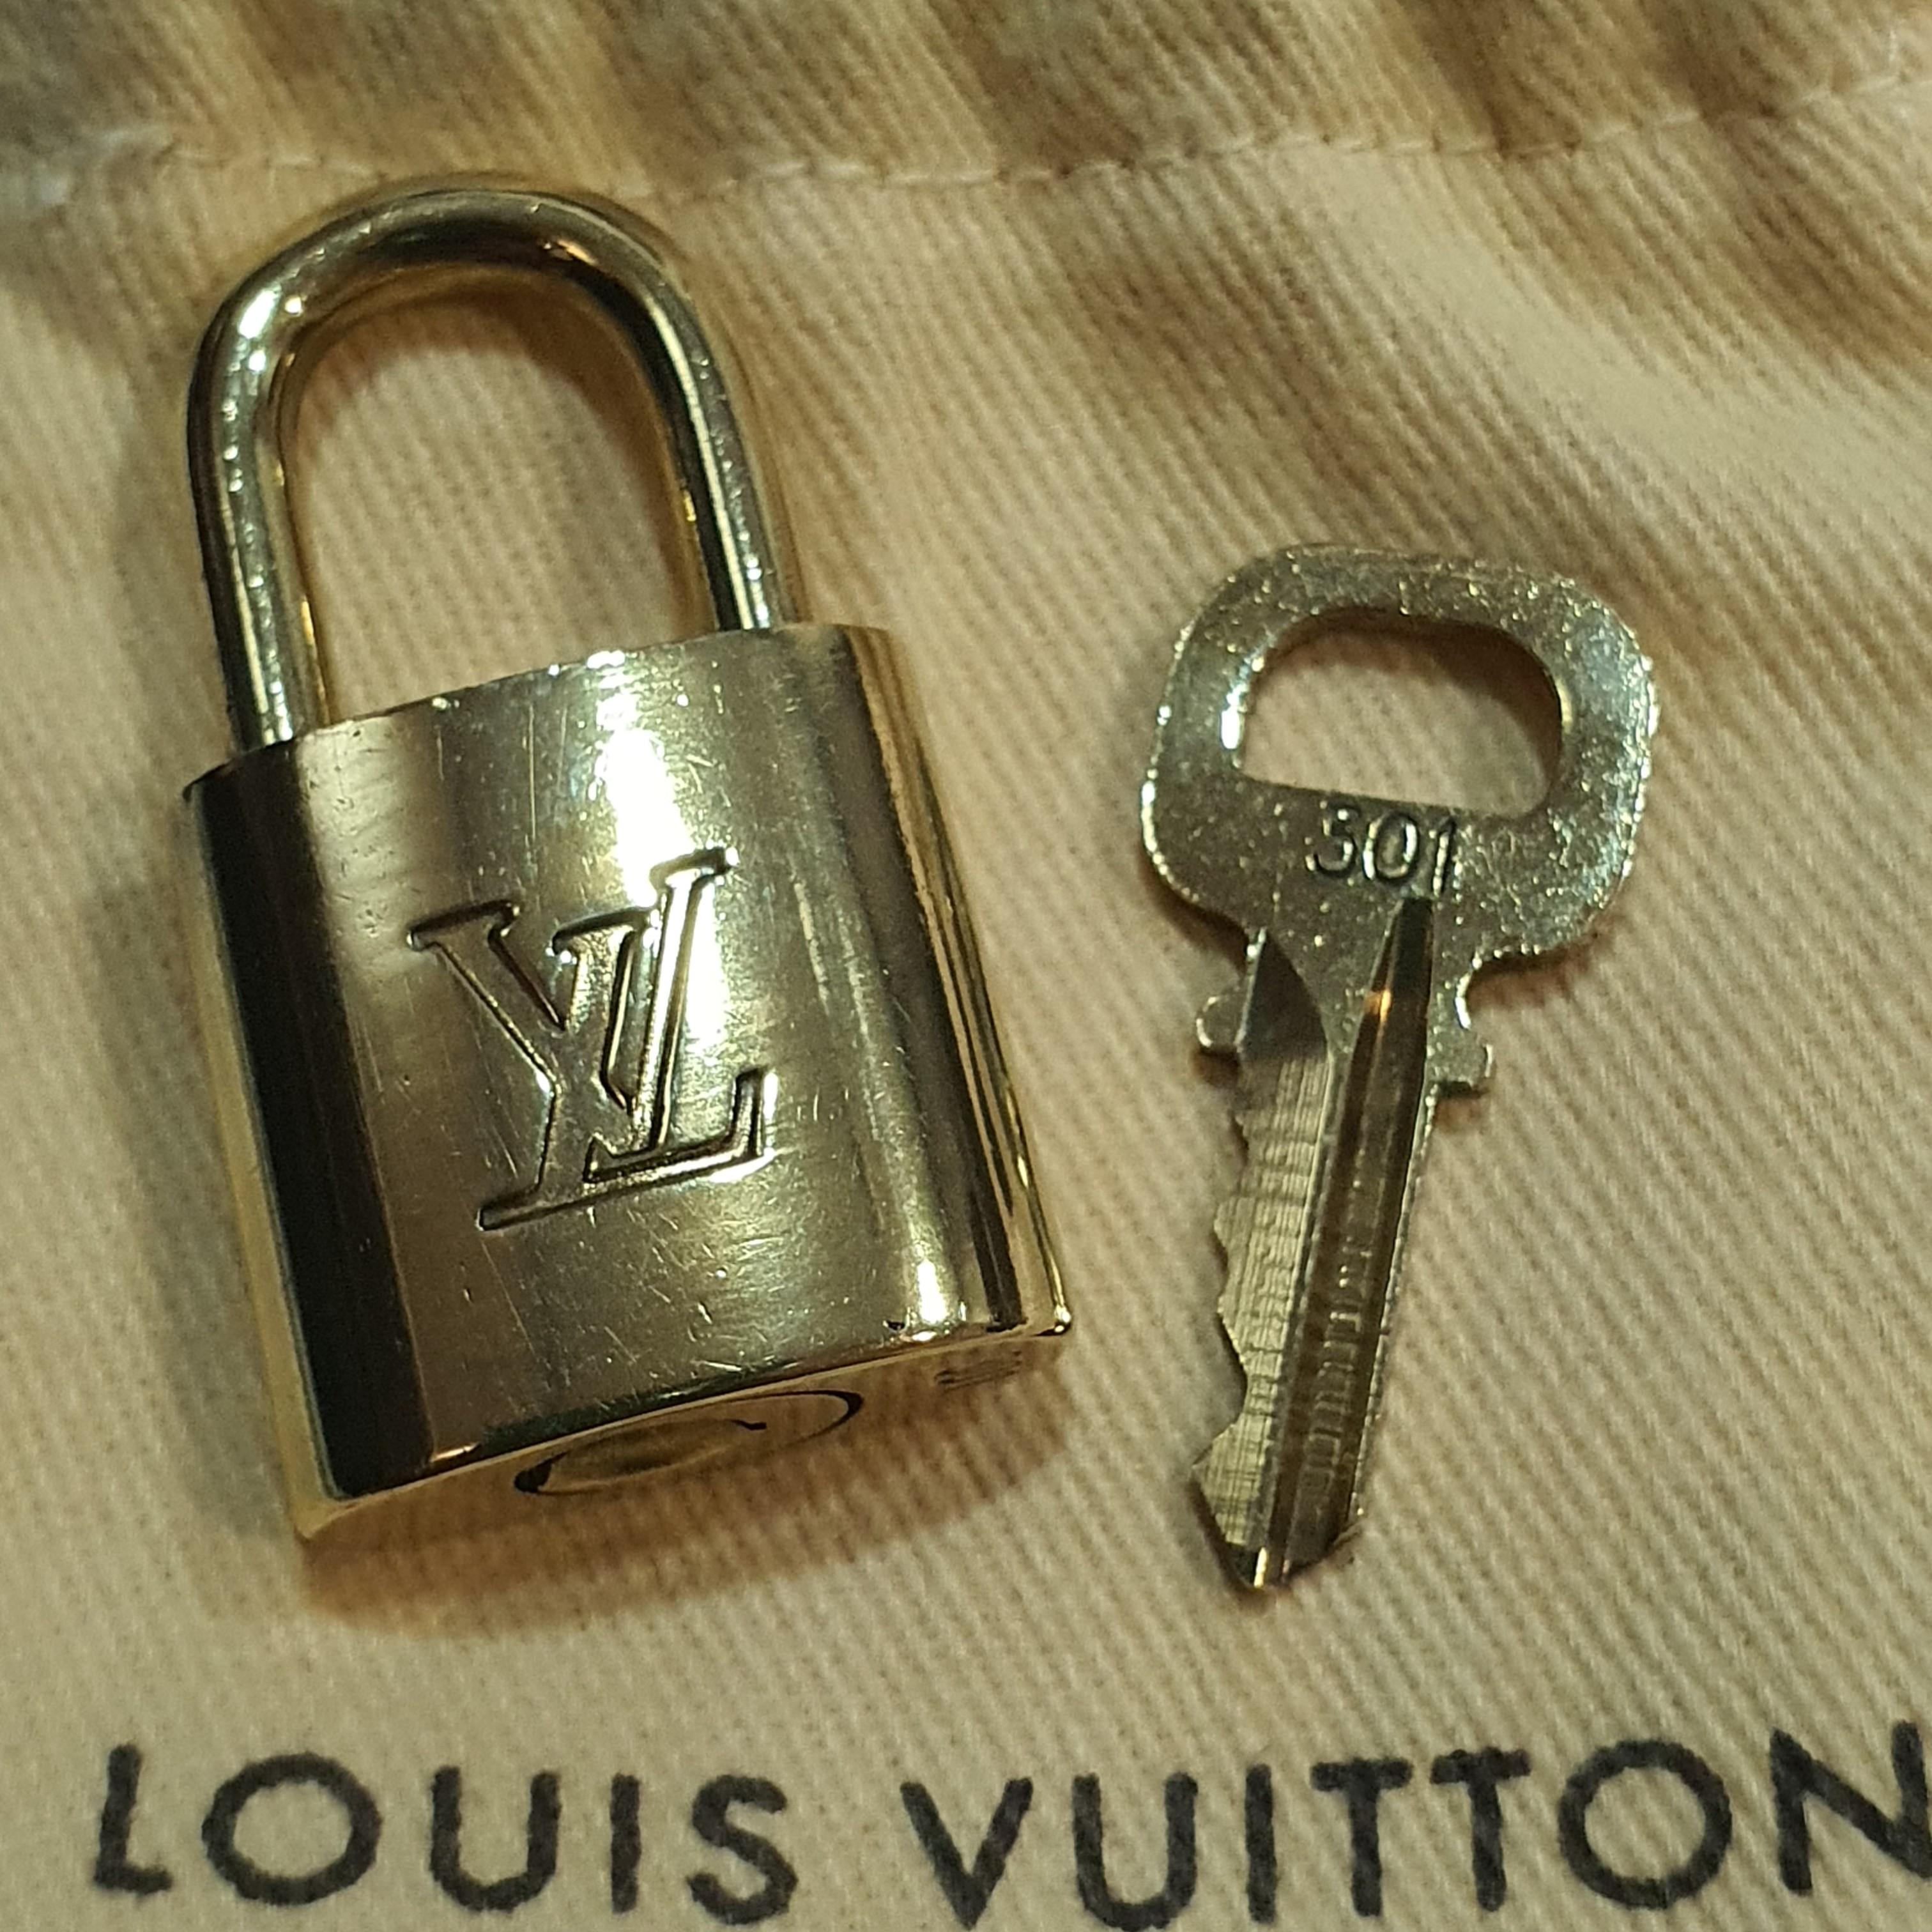 How to spot an Authentic Louis Vuitton Padlock